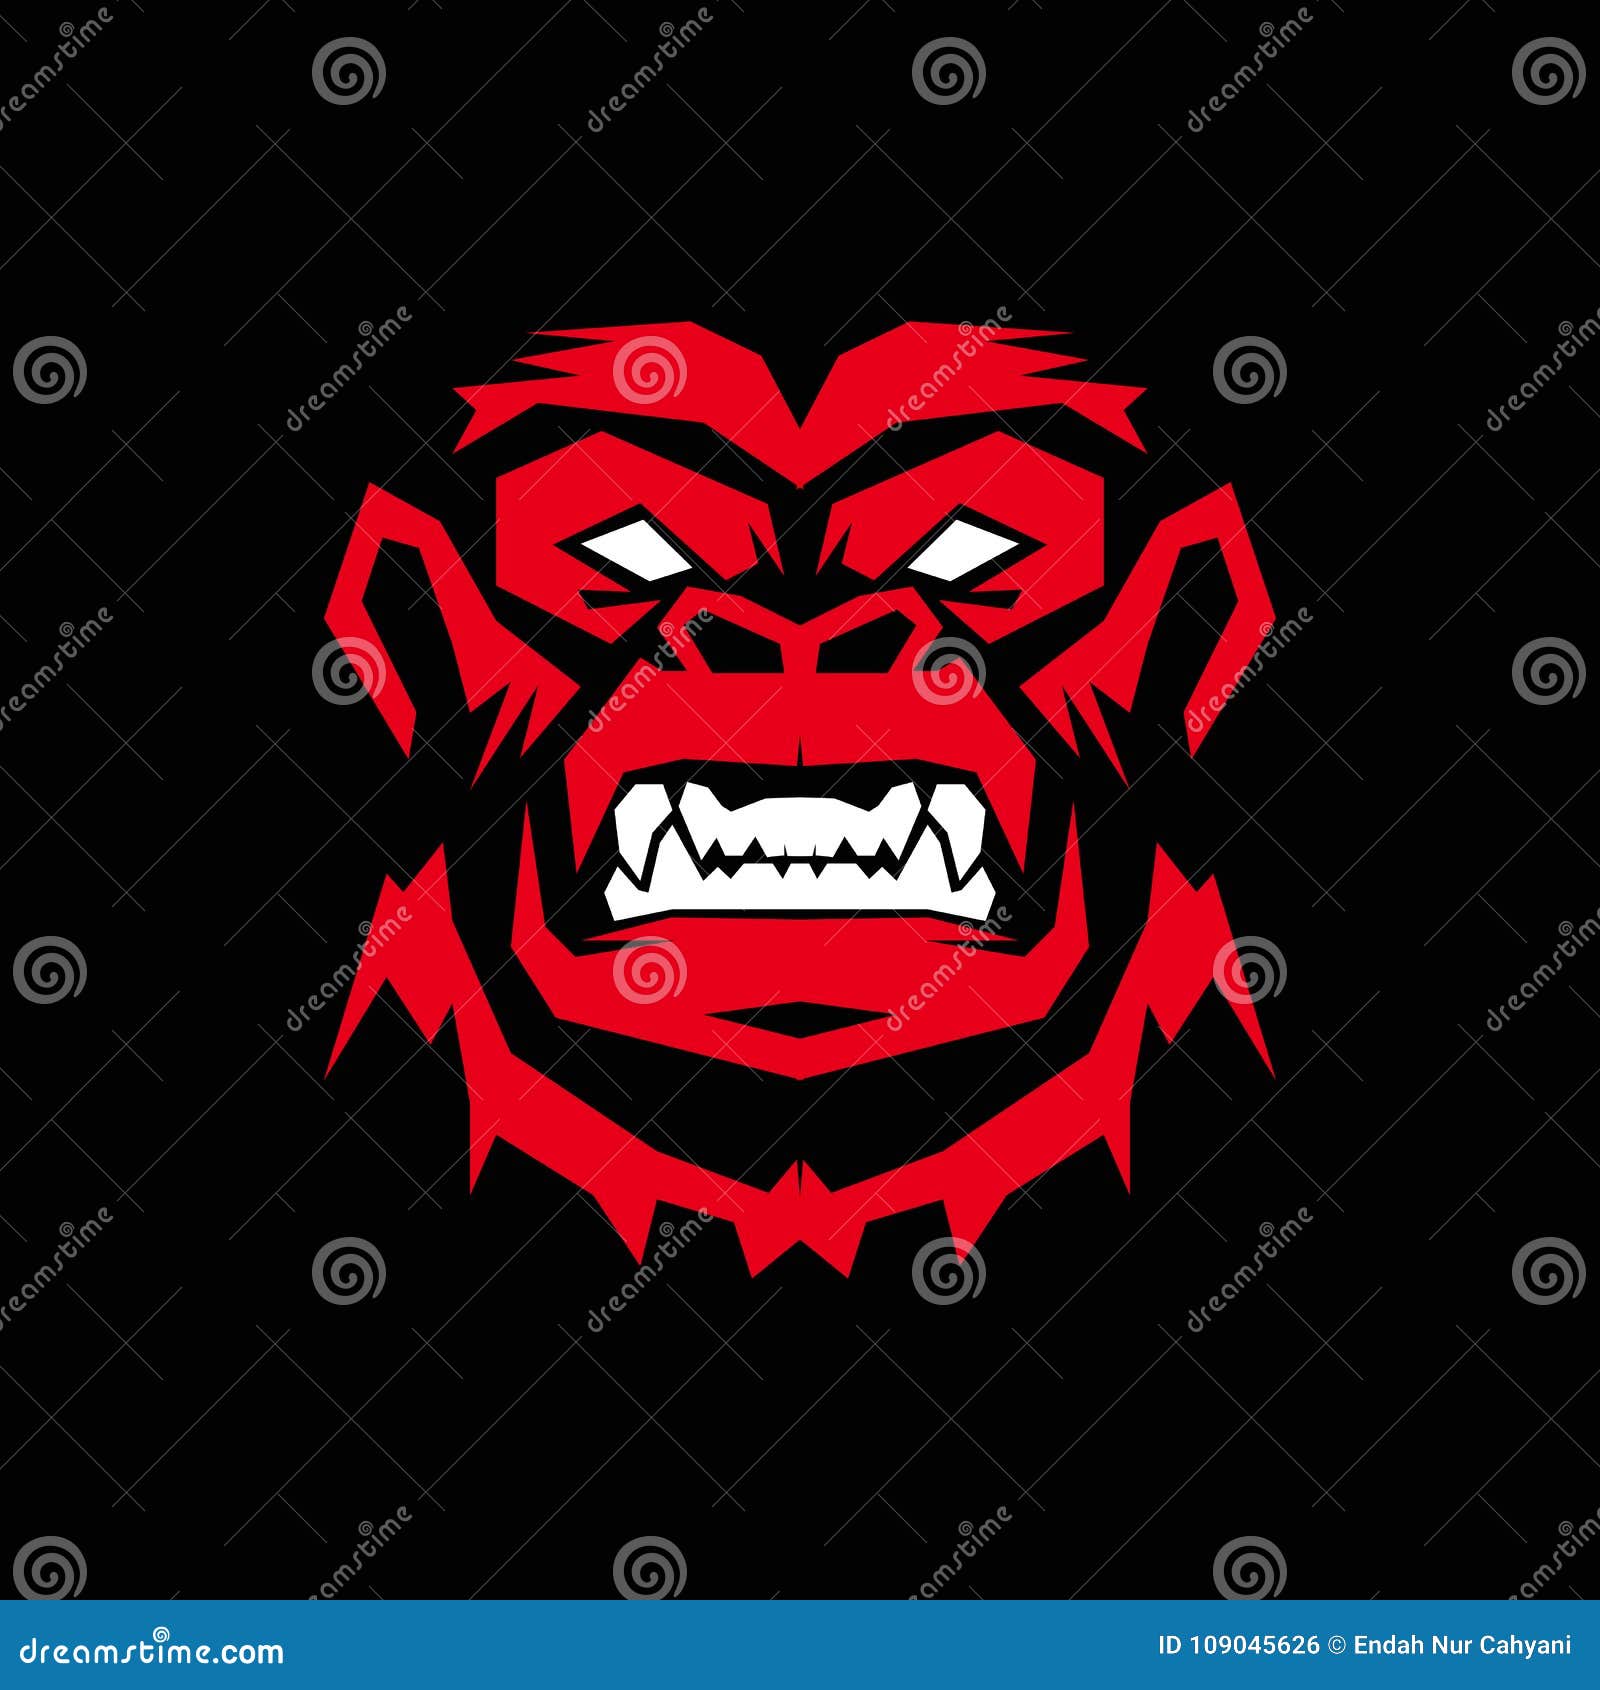 Gorilla Ape Mascot Ice Hockey Team Logo Design Vector with Modern  Illustration Concept Style for Badge, Emblem and Tshirt Printing Stock  Vector - Illustration of chimpanzee, cartoon: 269515326